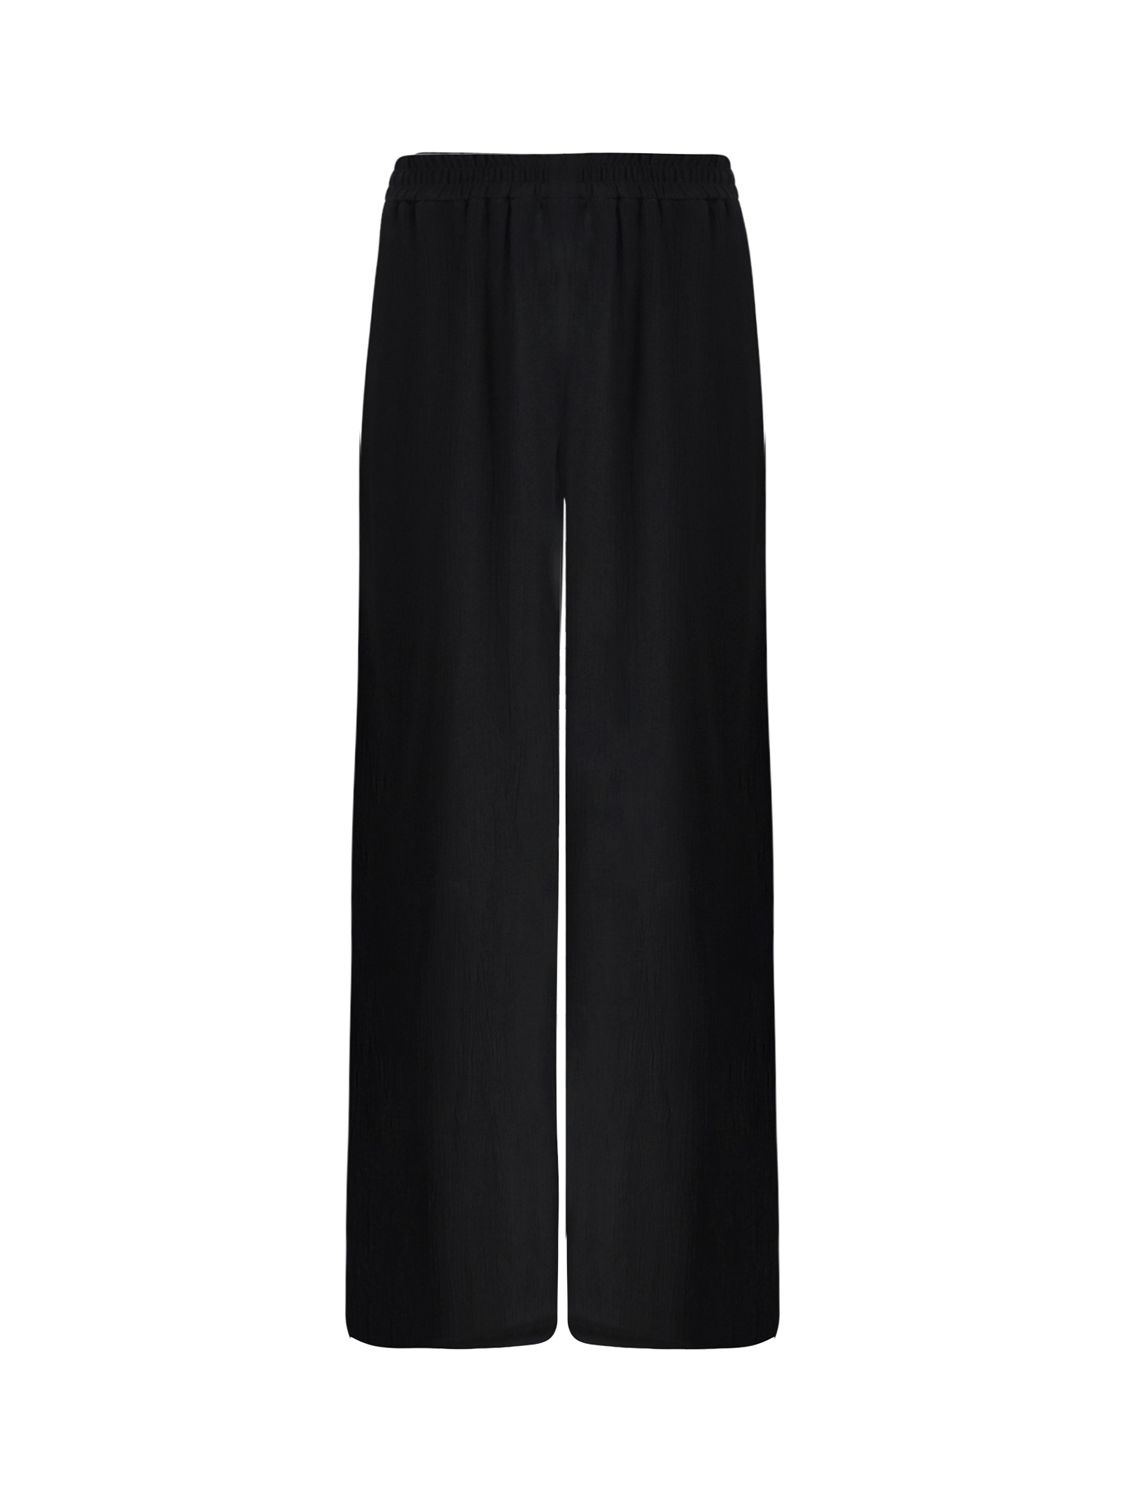 Ro&Zo Elasticated Waist Trousers, Black at John Lewis & Partners